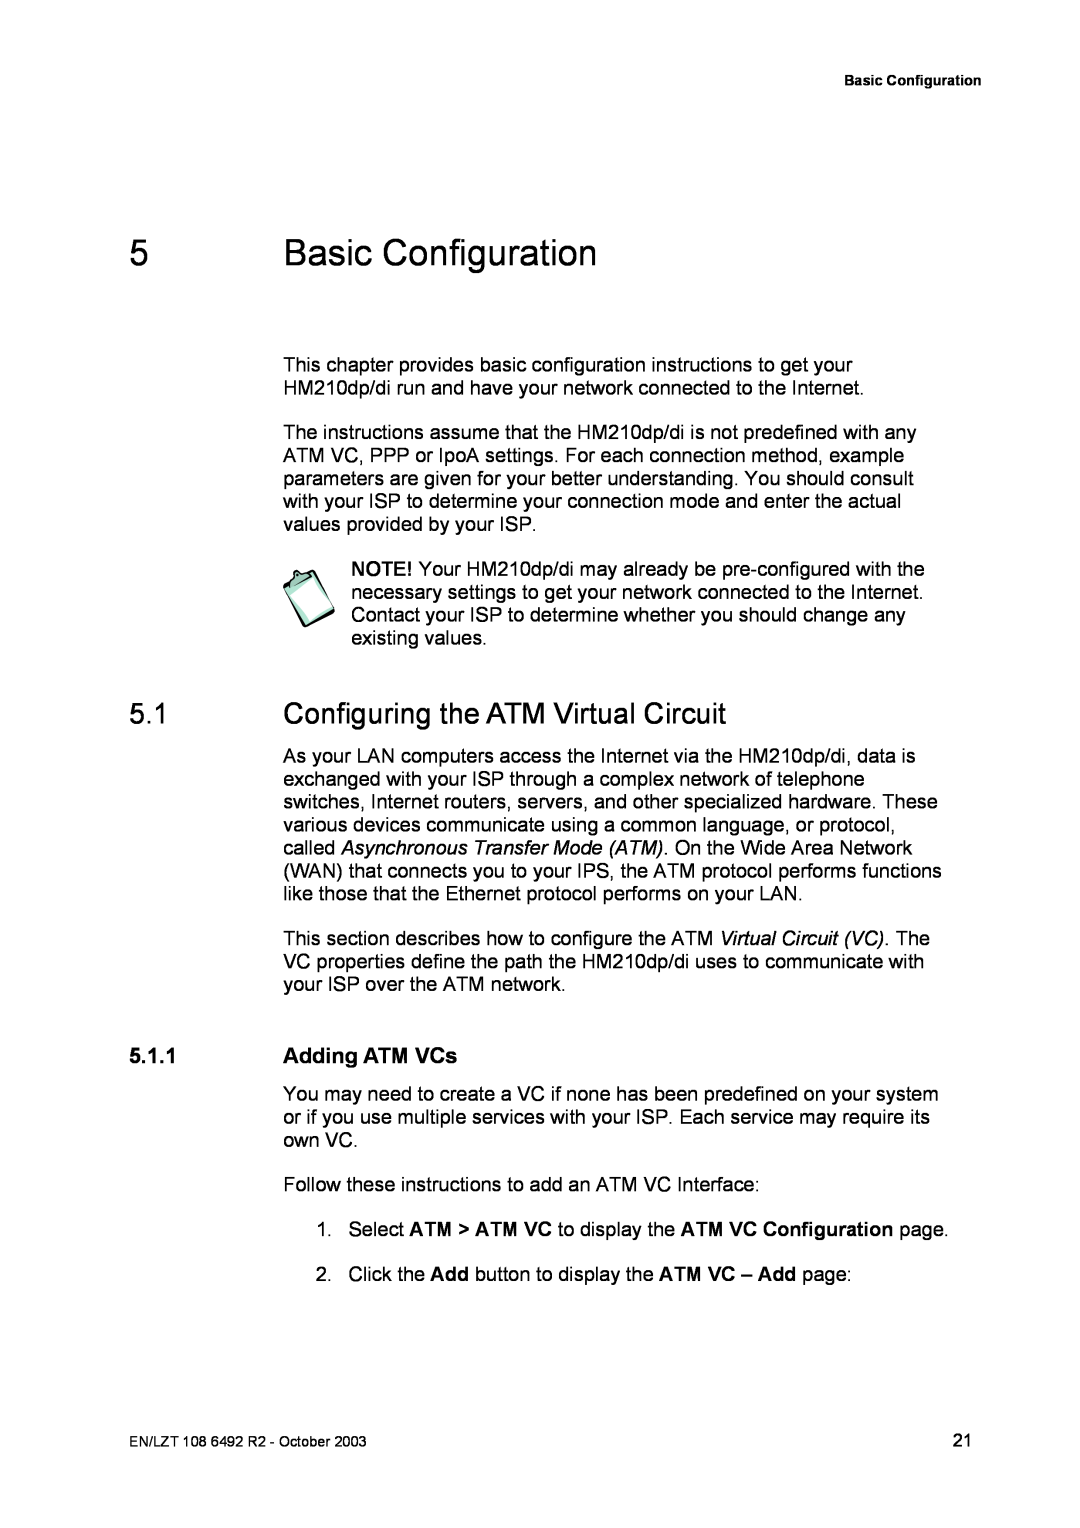 Garmin HM210DP/DI manual Basic Configuration, Configuring the ATM Virtual Circuit, Adding ATM VCs 